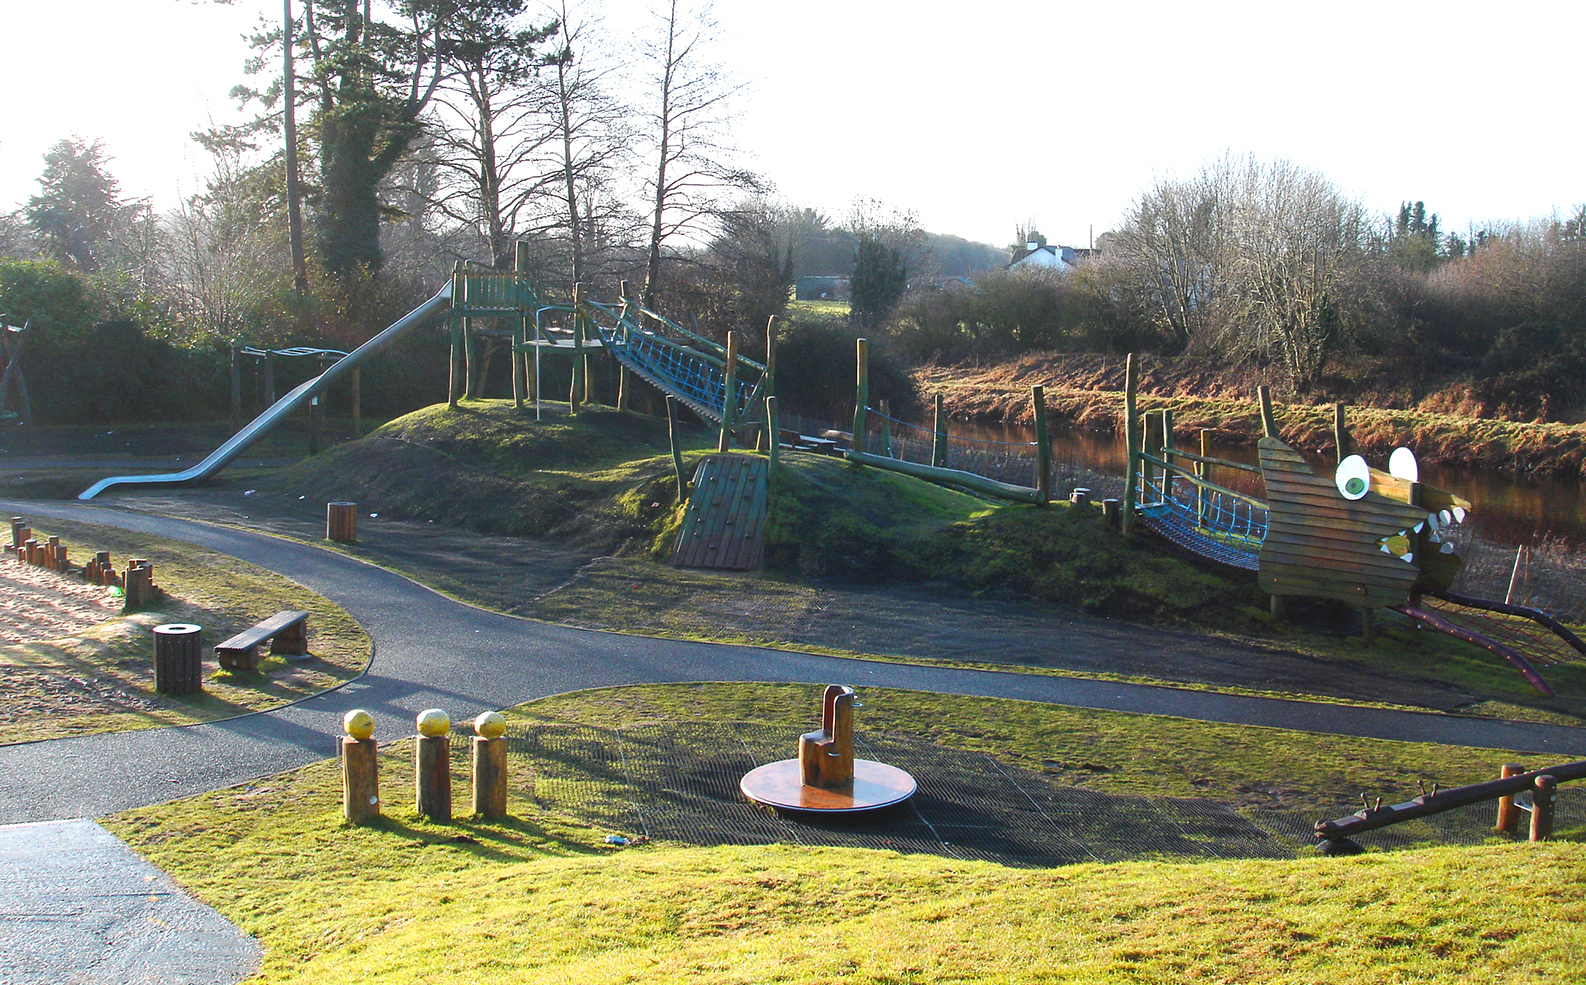 Playground for Monasterevin in Kildare